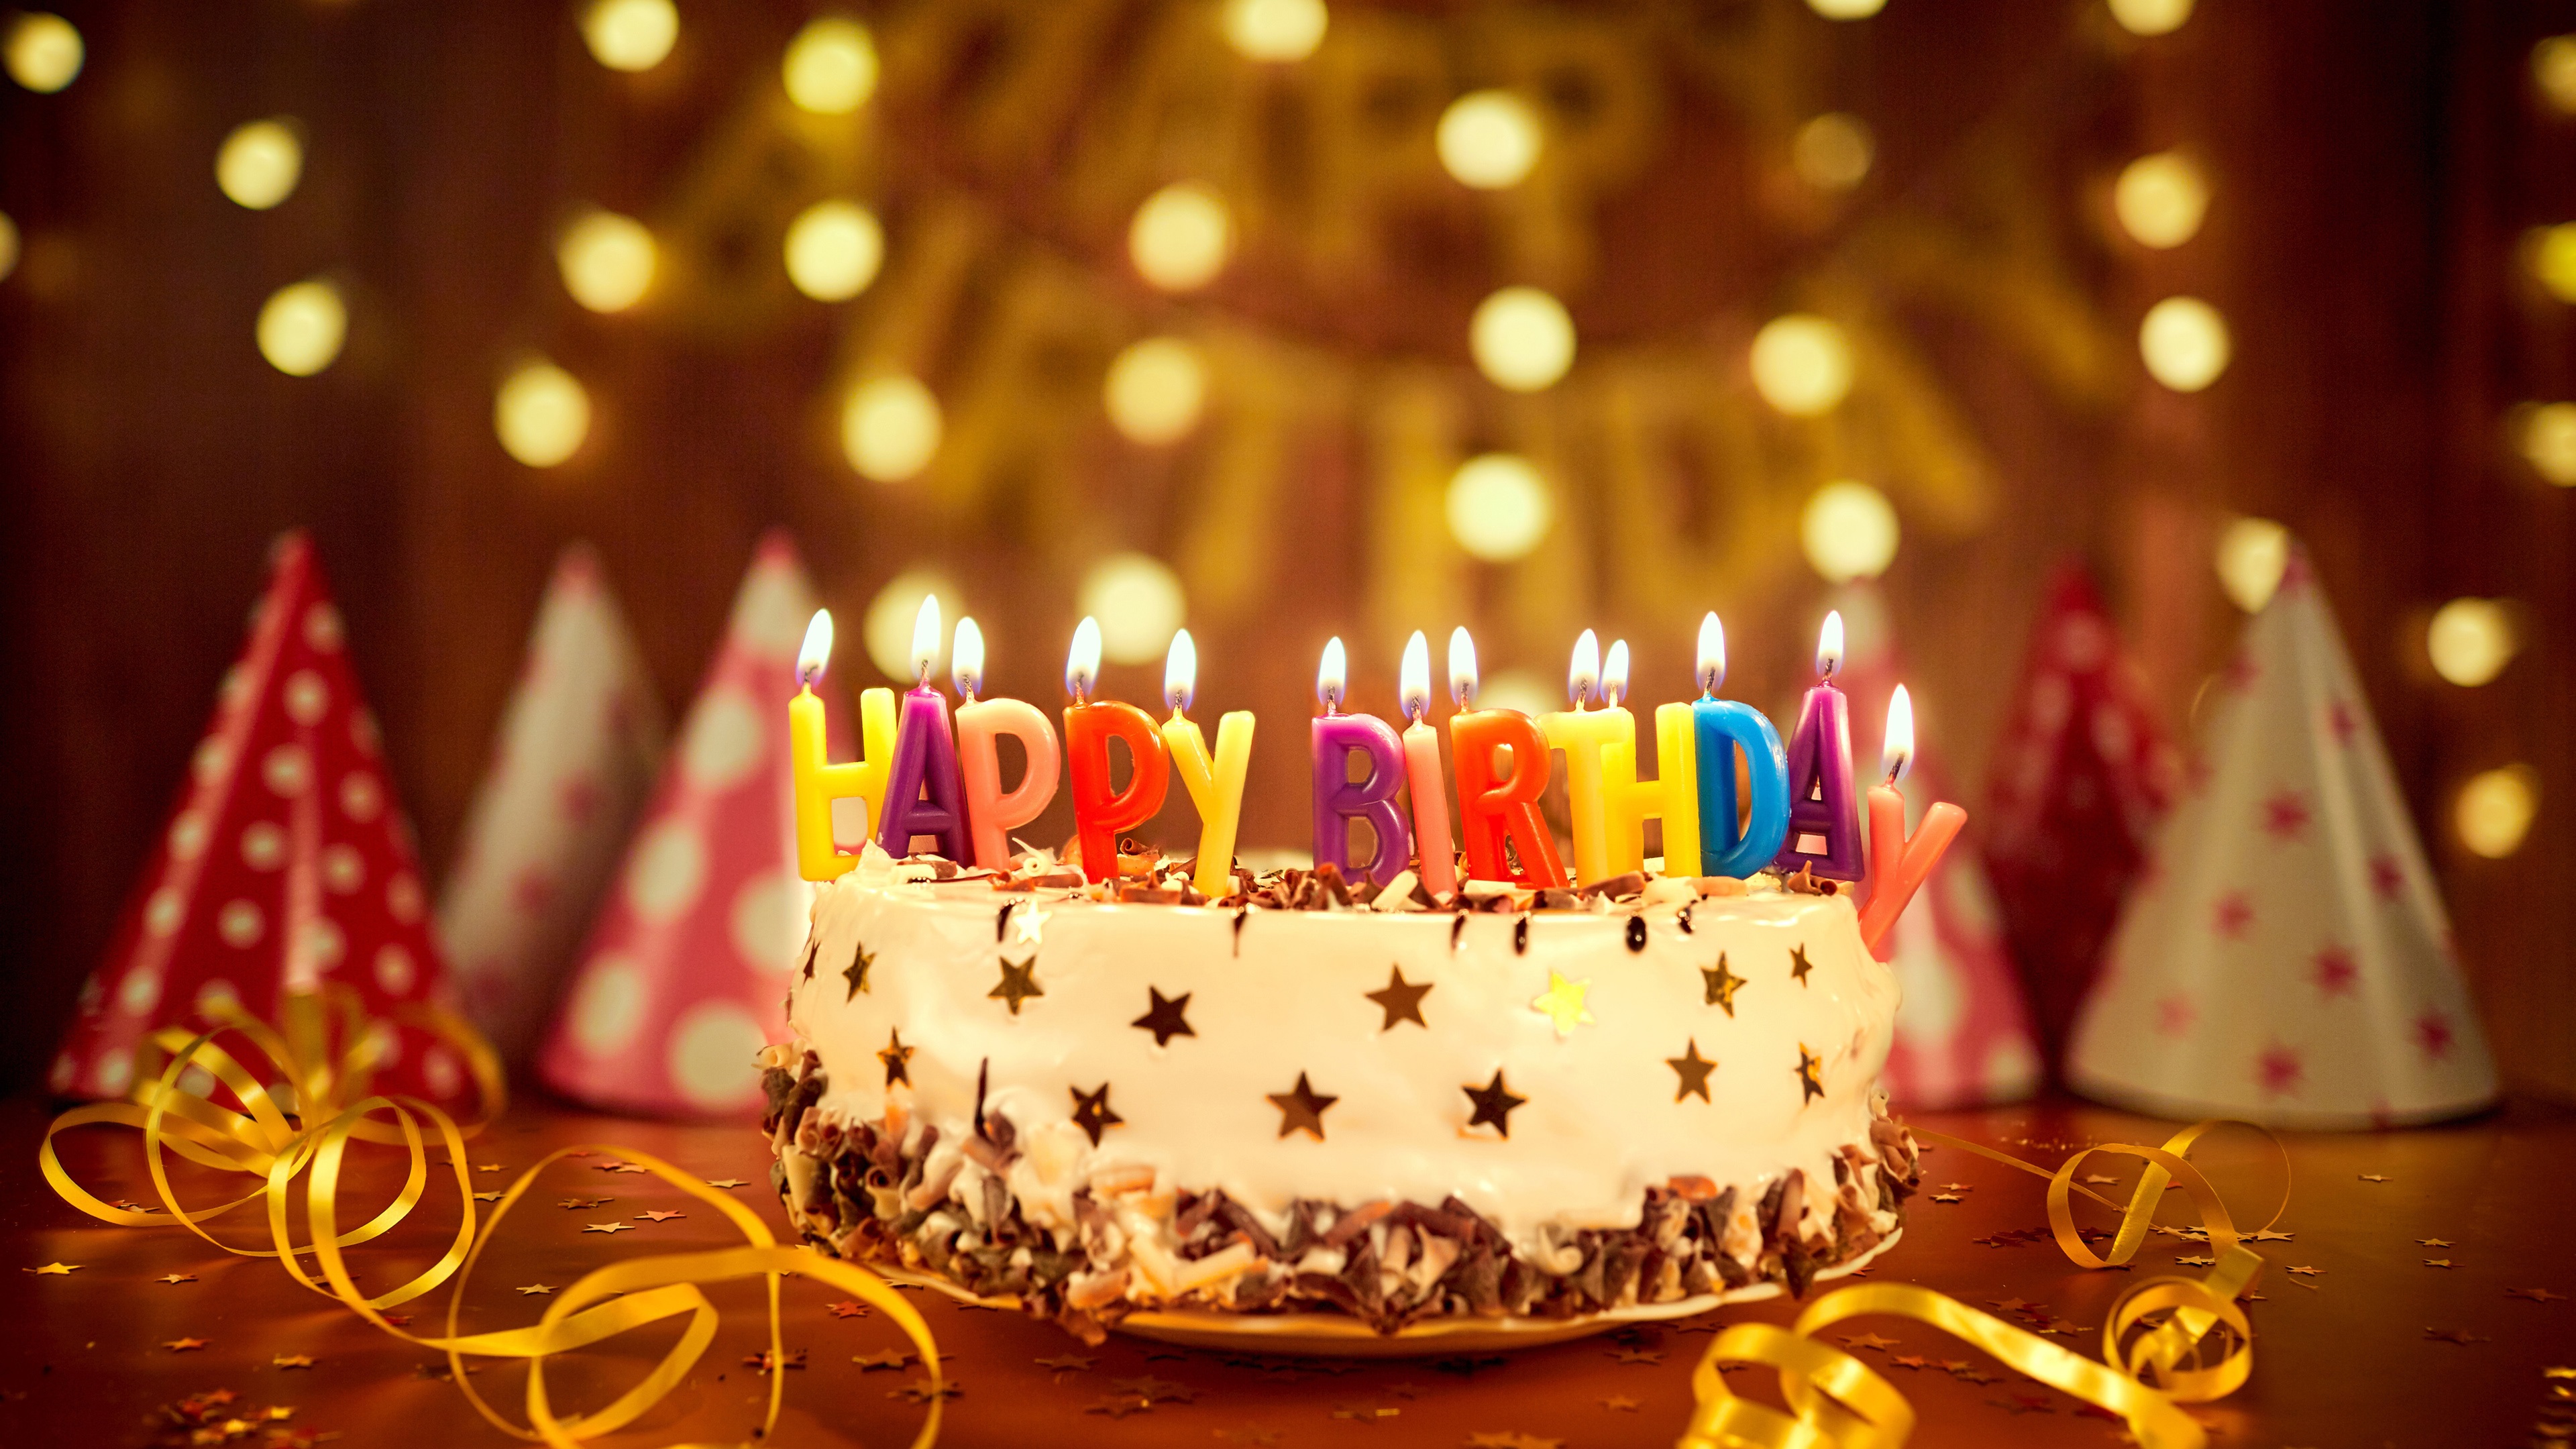 birthday wallpaper,cake,lighting,birthday cake,candle,cake decorating